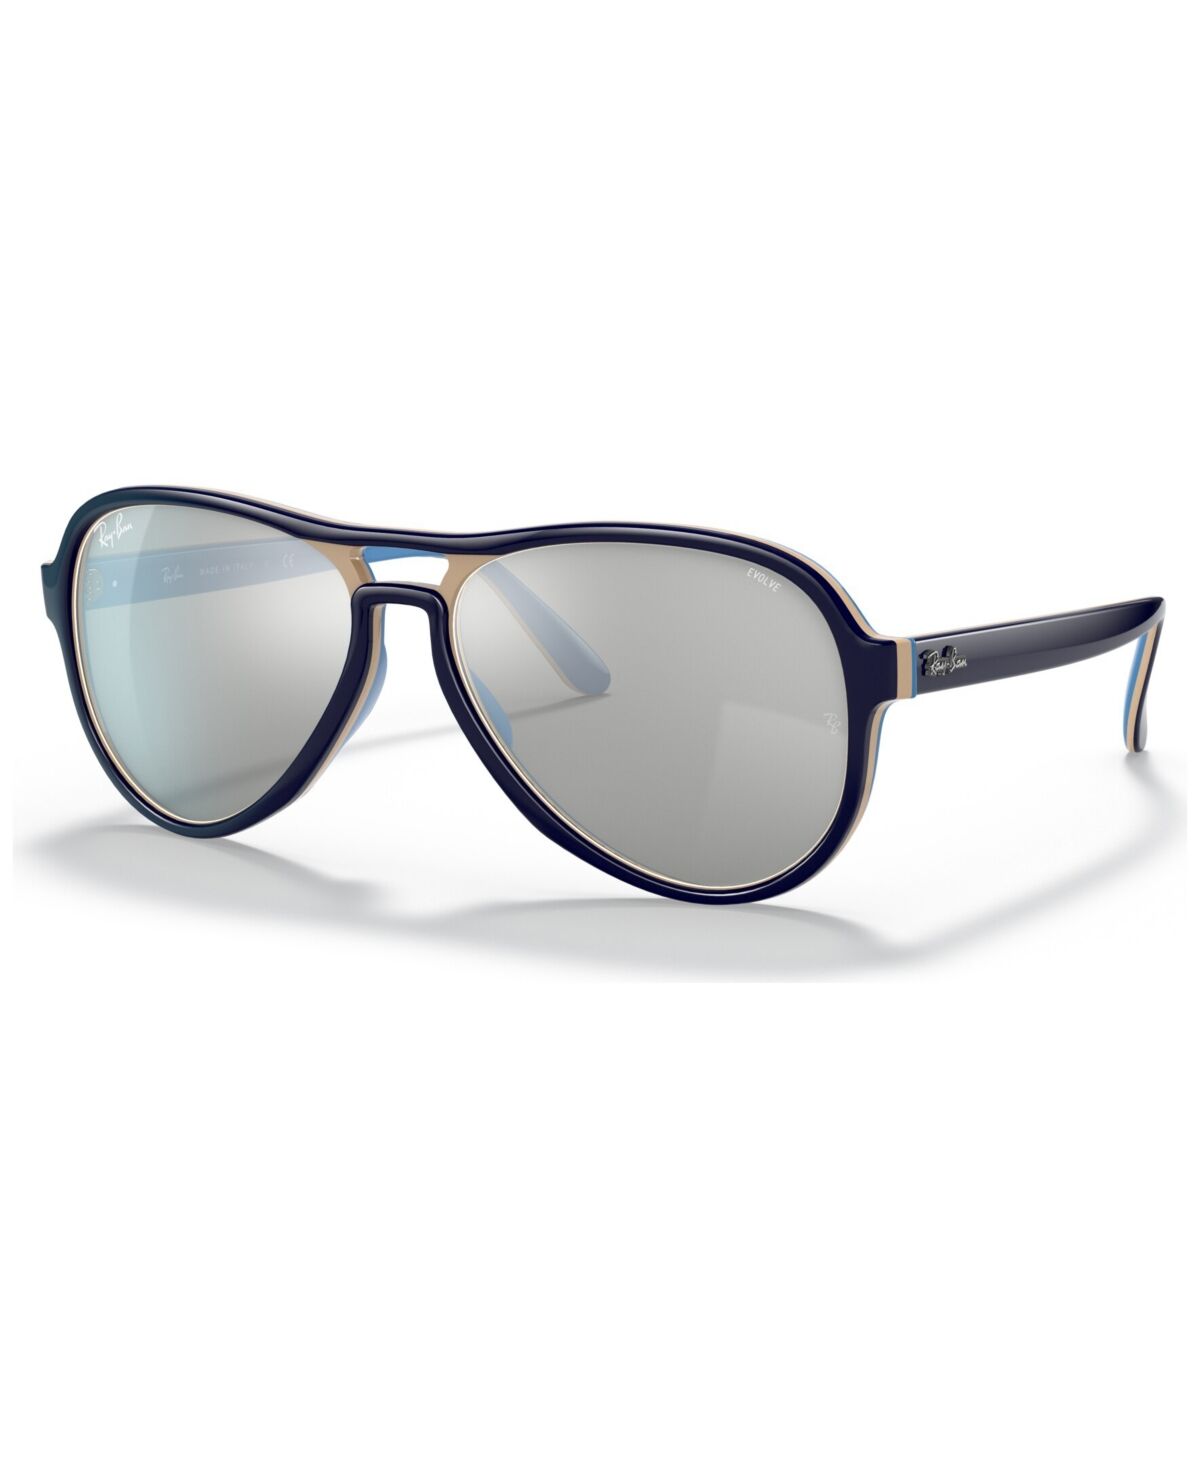 Ray-Ban Unisex Vagabond Mirror Evolve Sunglasses, Mirror Photochromic RB4355 - Light Blue